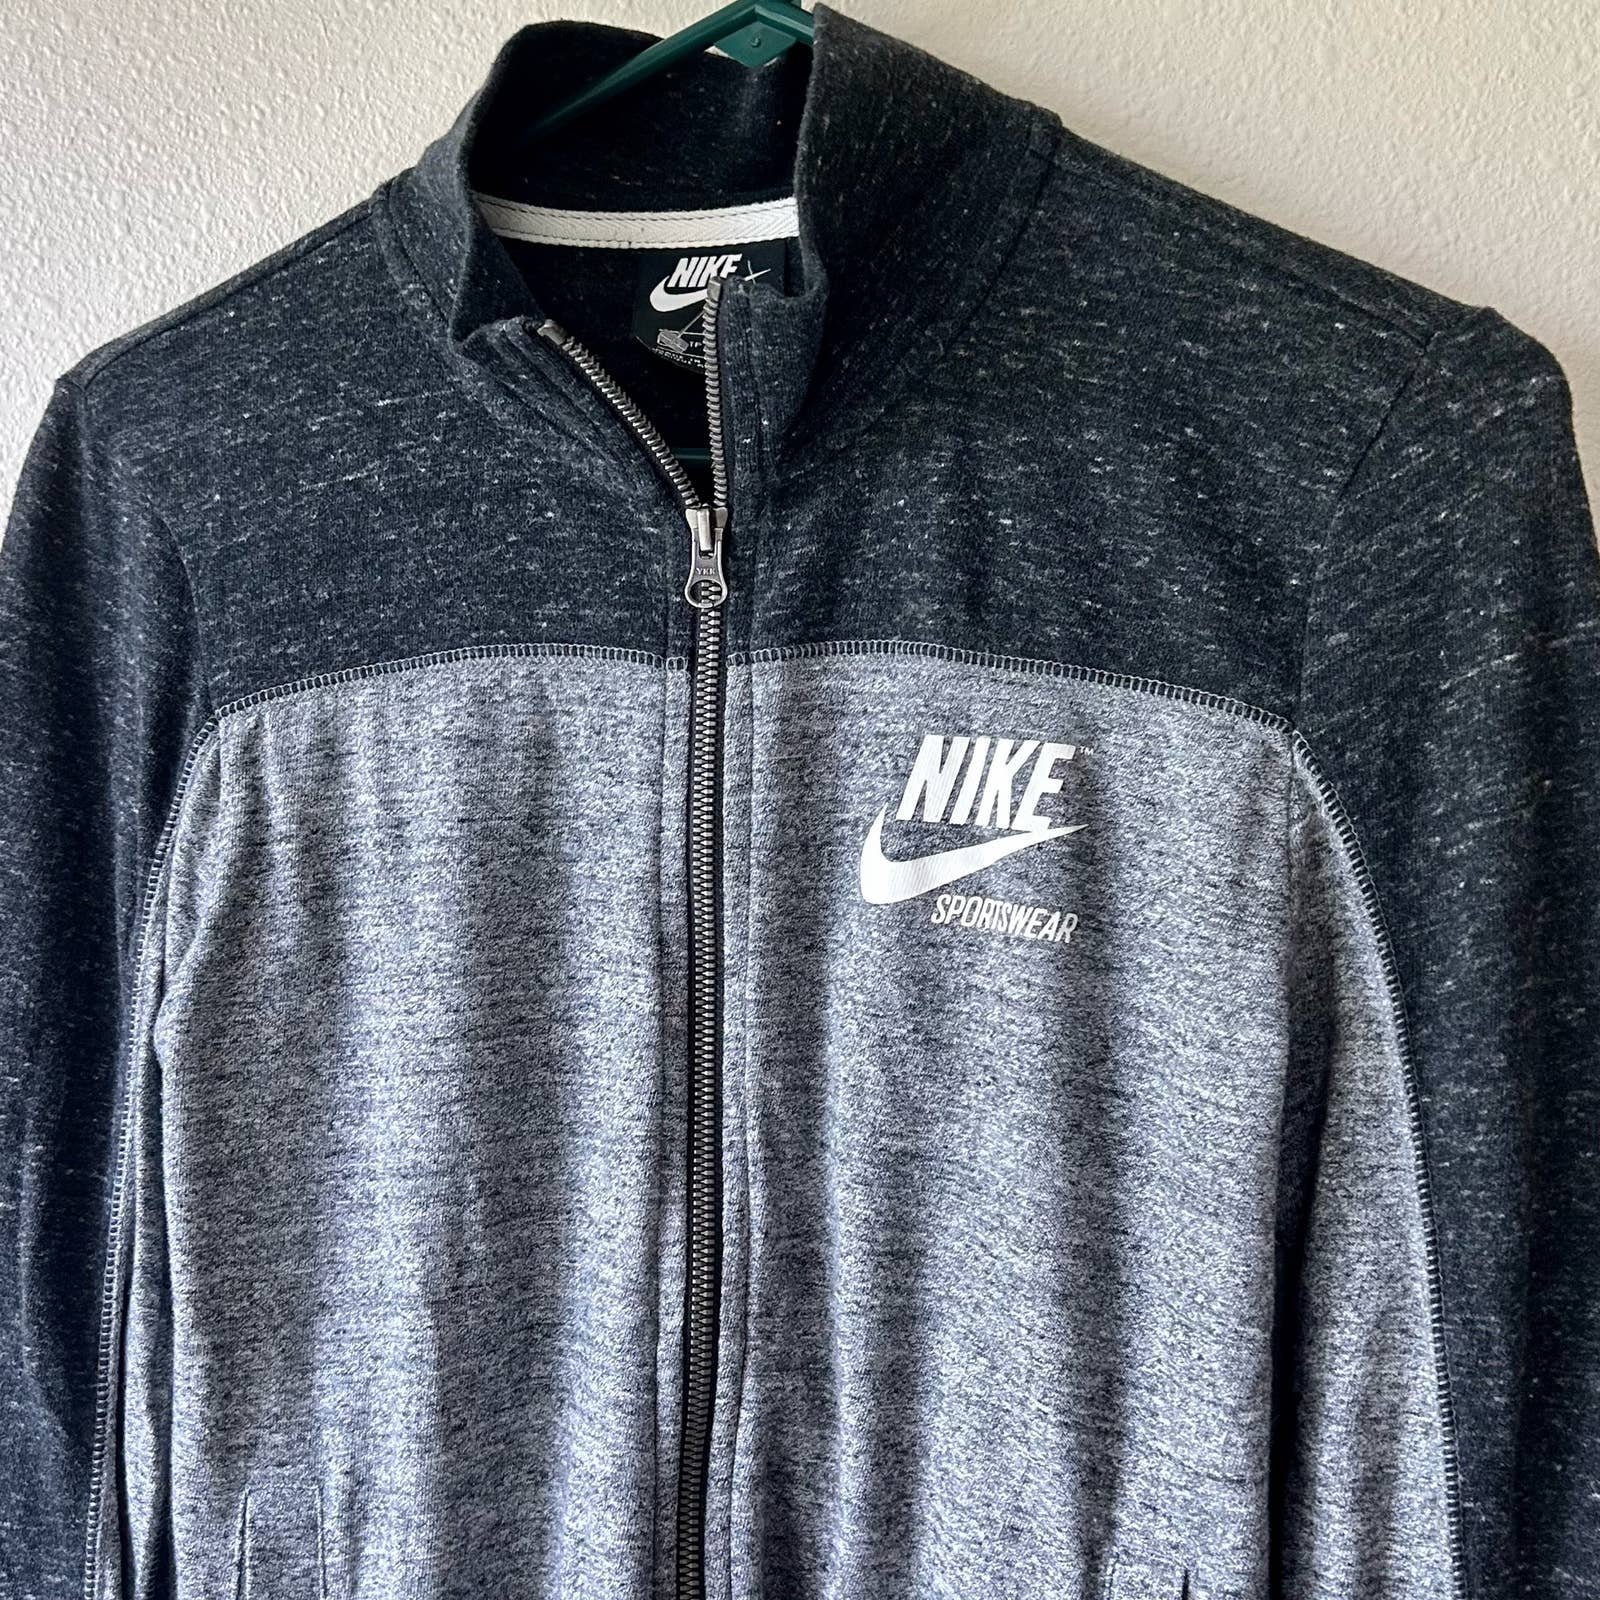 the Lowest price Nike sports wear warm up zip black gray jacket size XSmall nQVBYAefs no tax